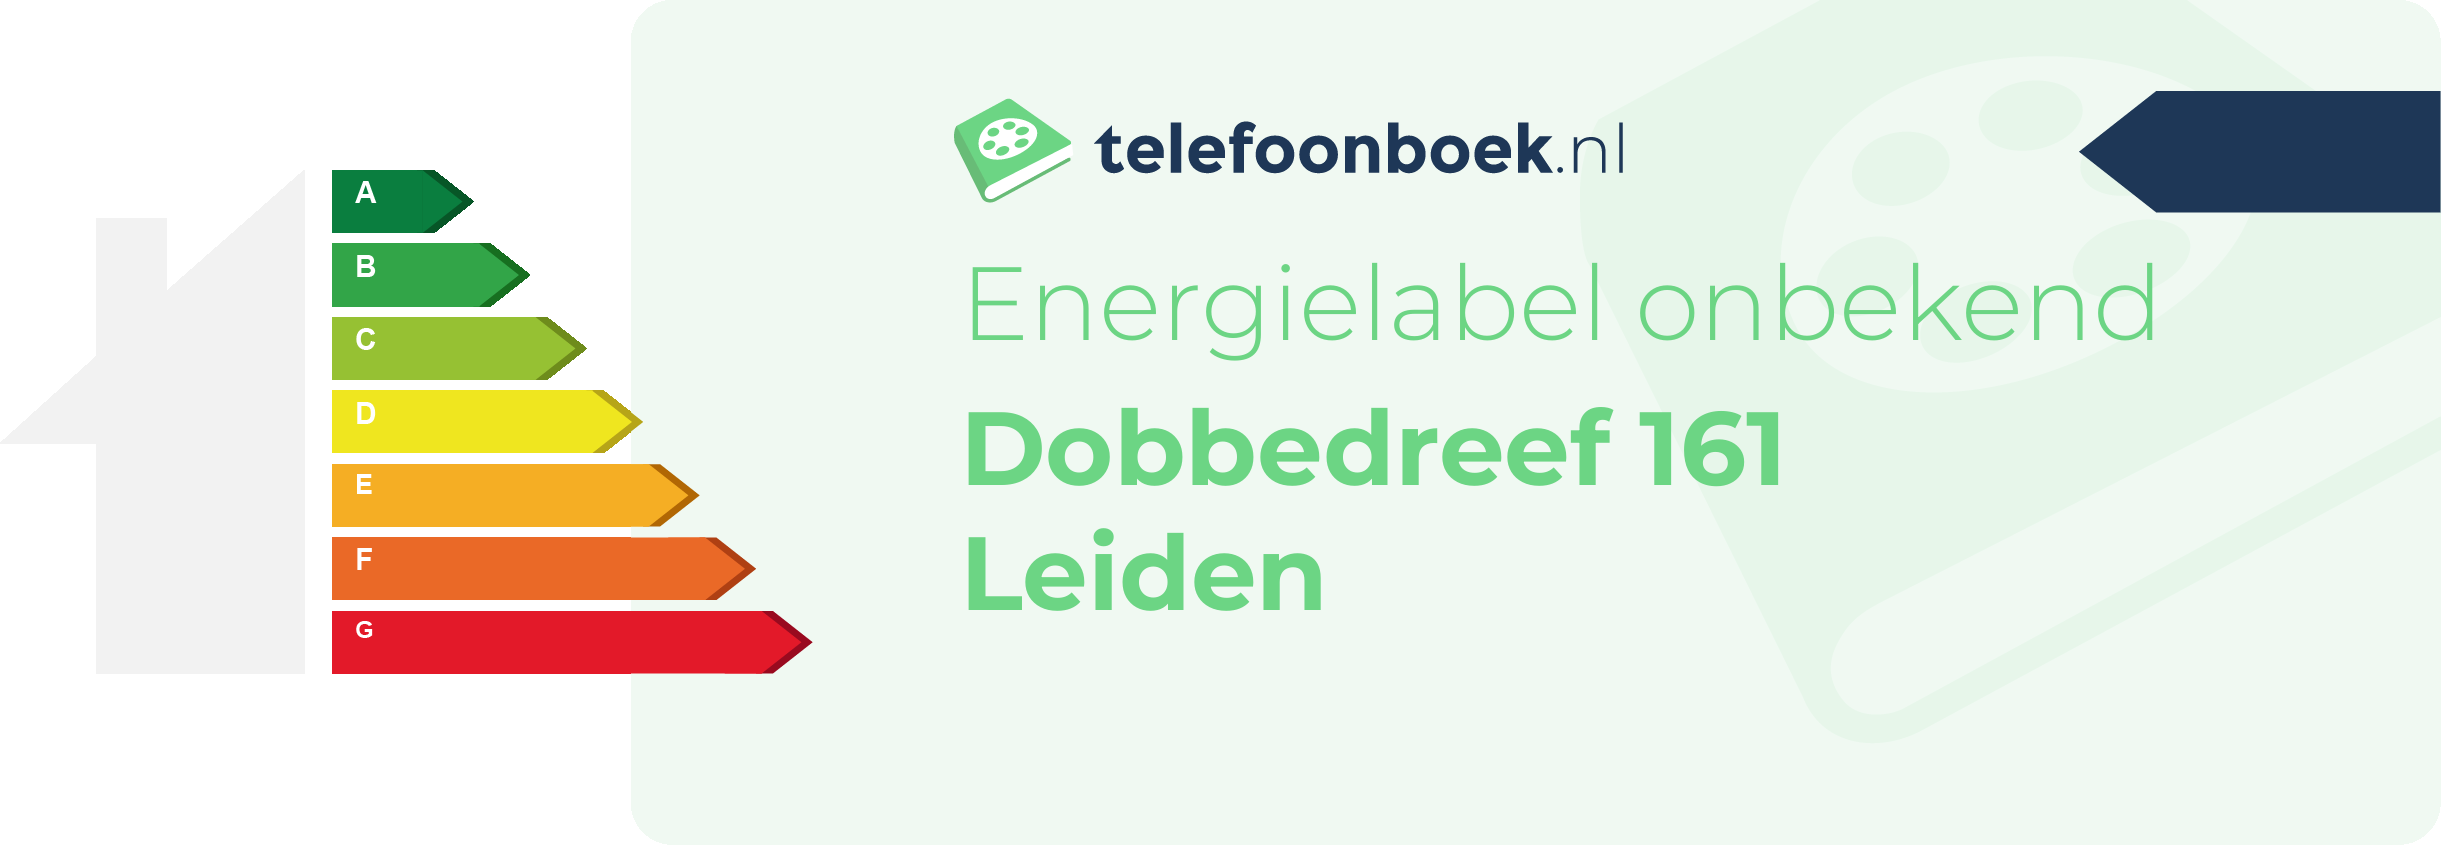 Energielabel Dobbedreef 161 Leiden